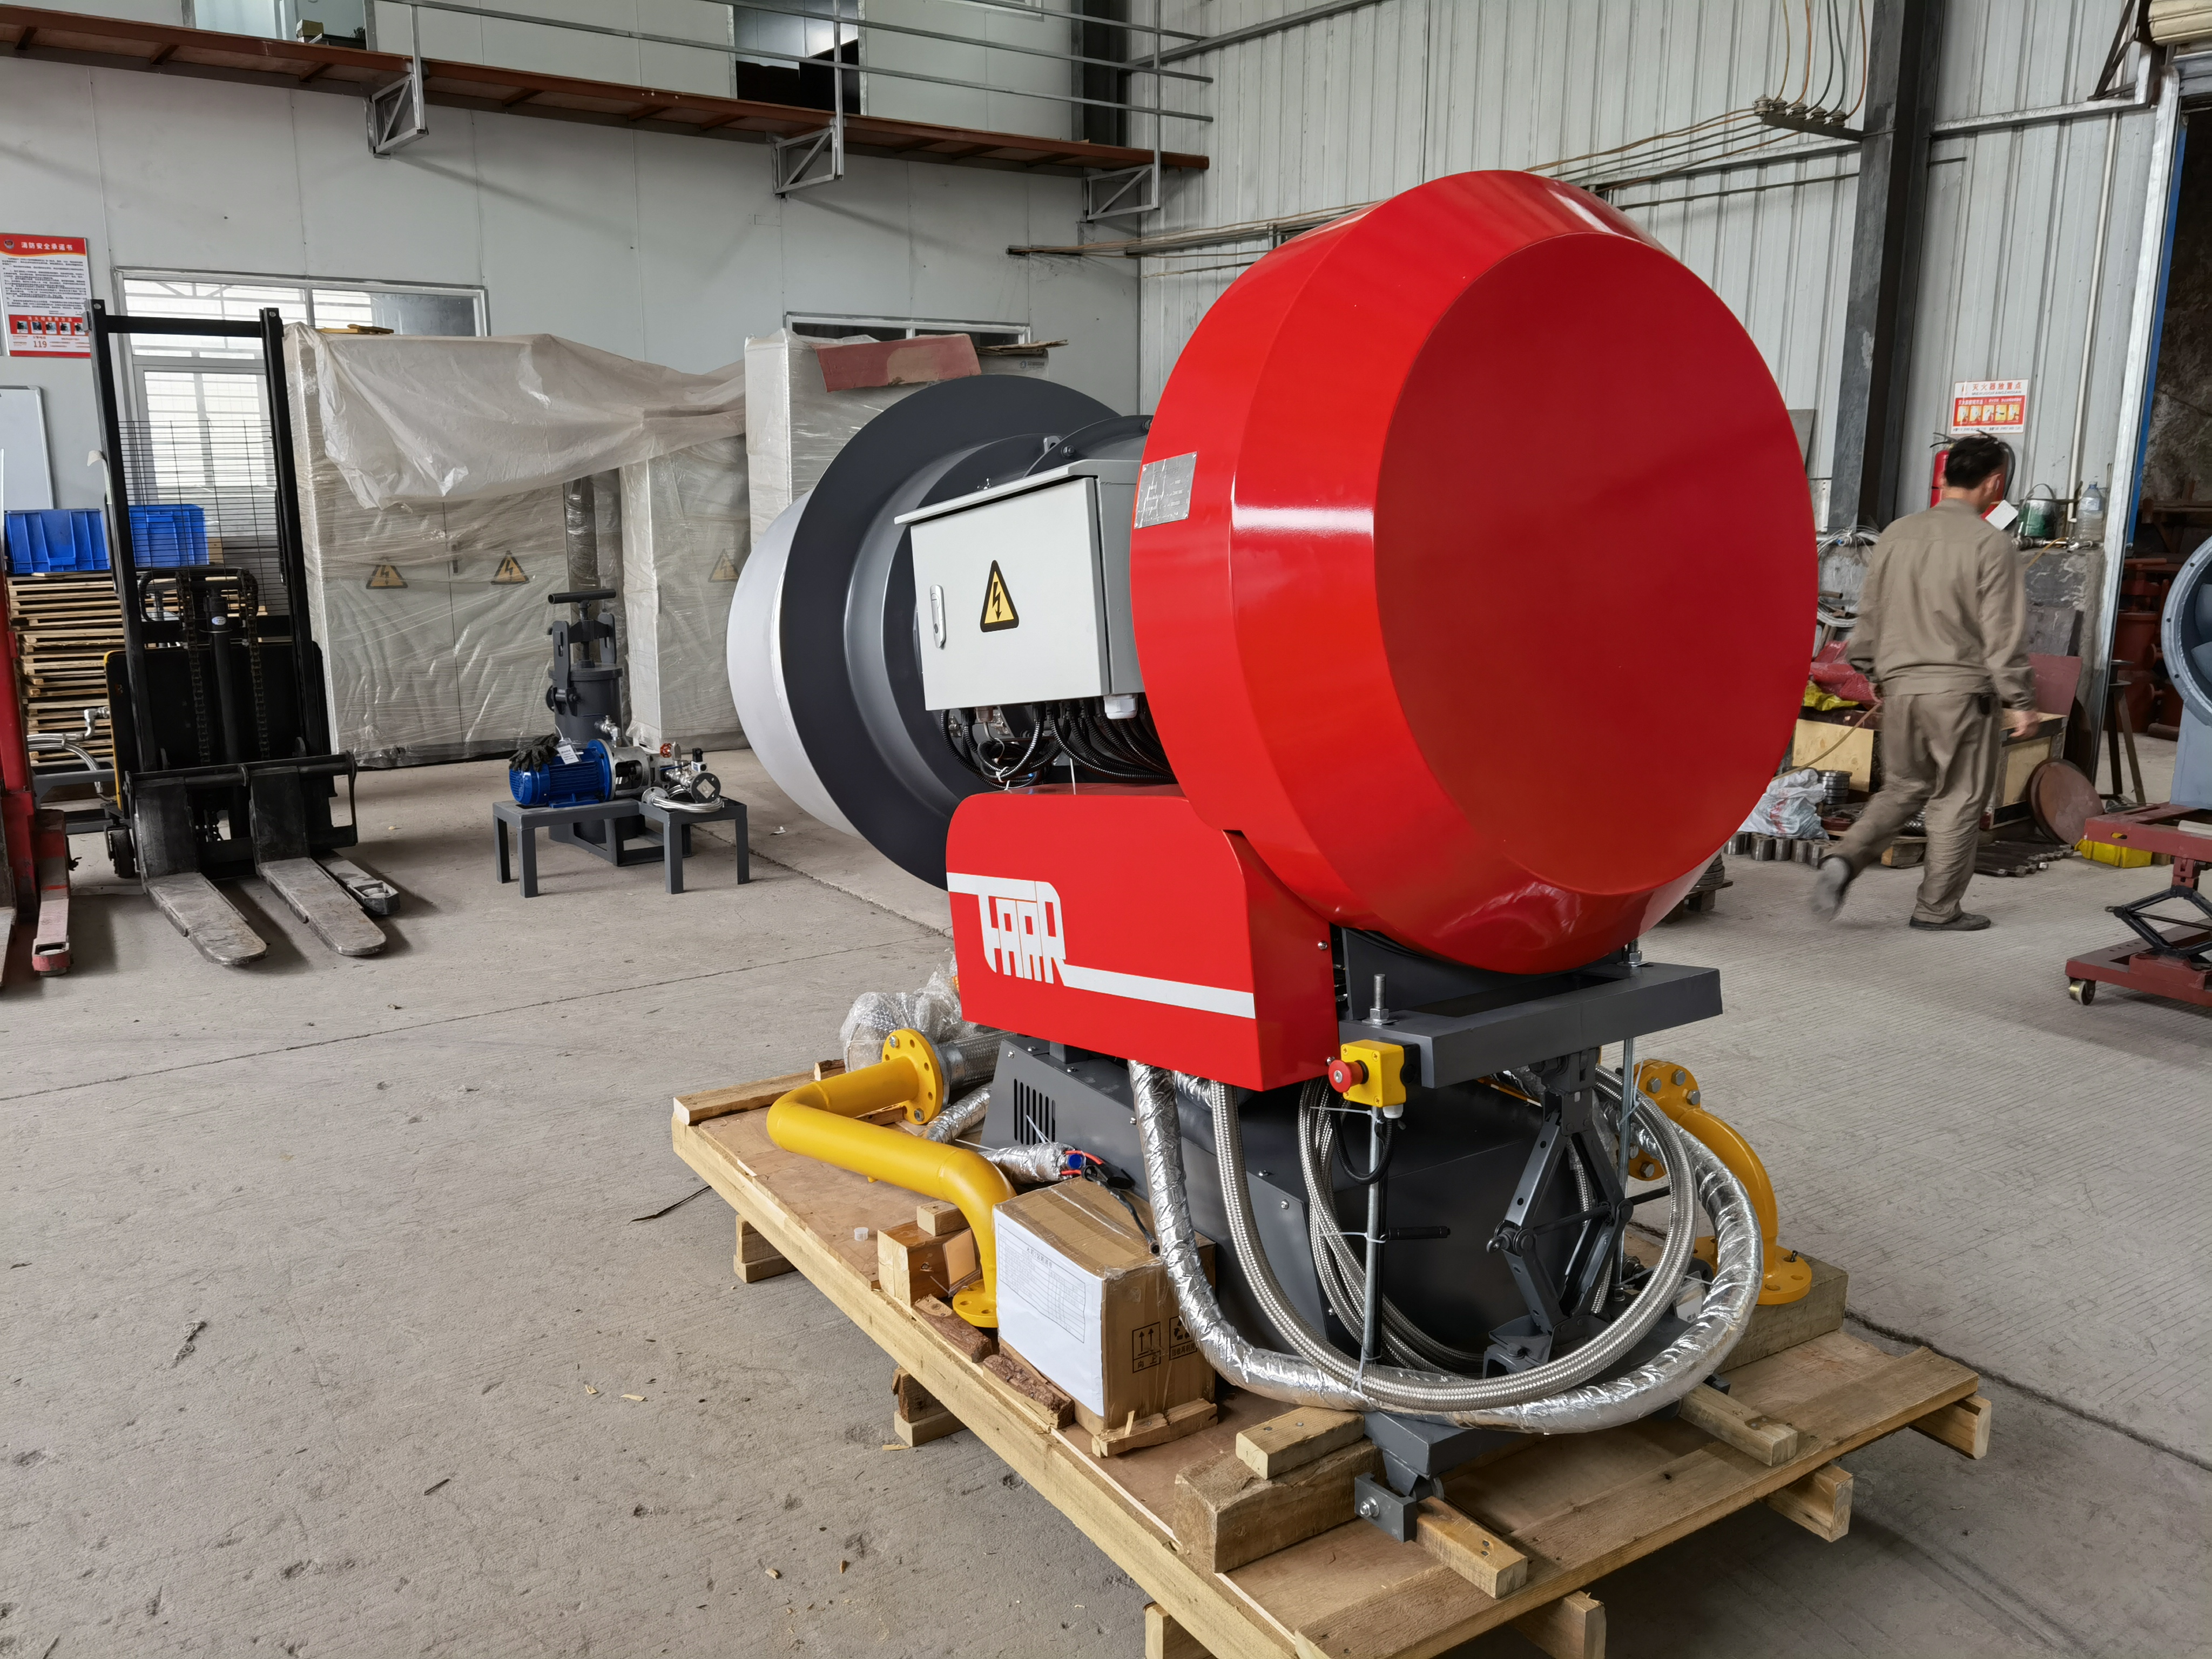 Industrial boiler burner waste oil burner thermal control system Farr machinery